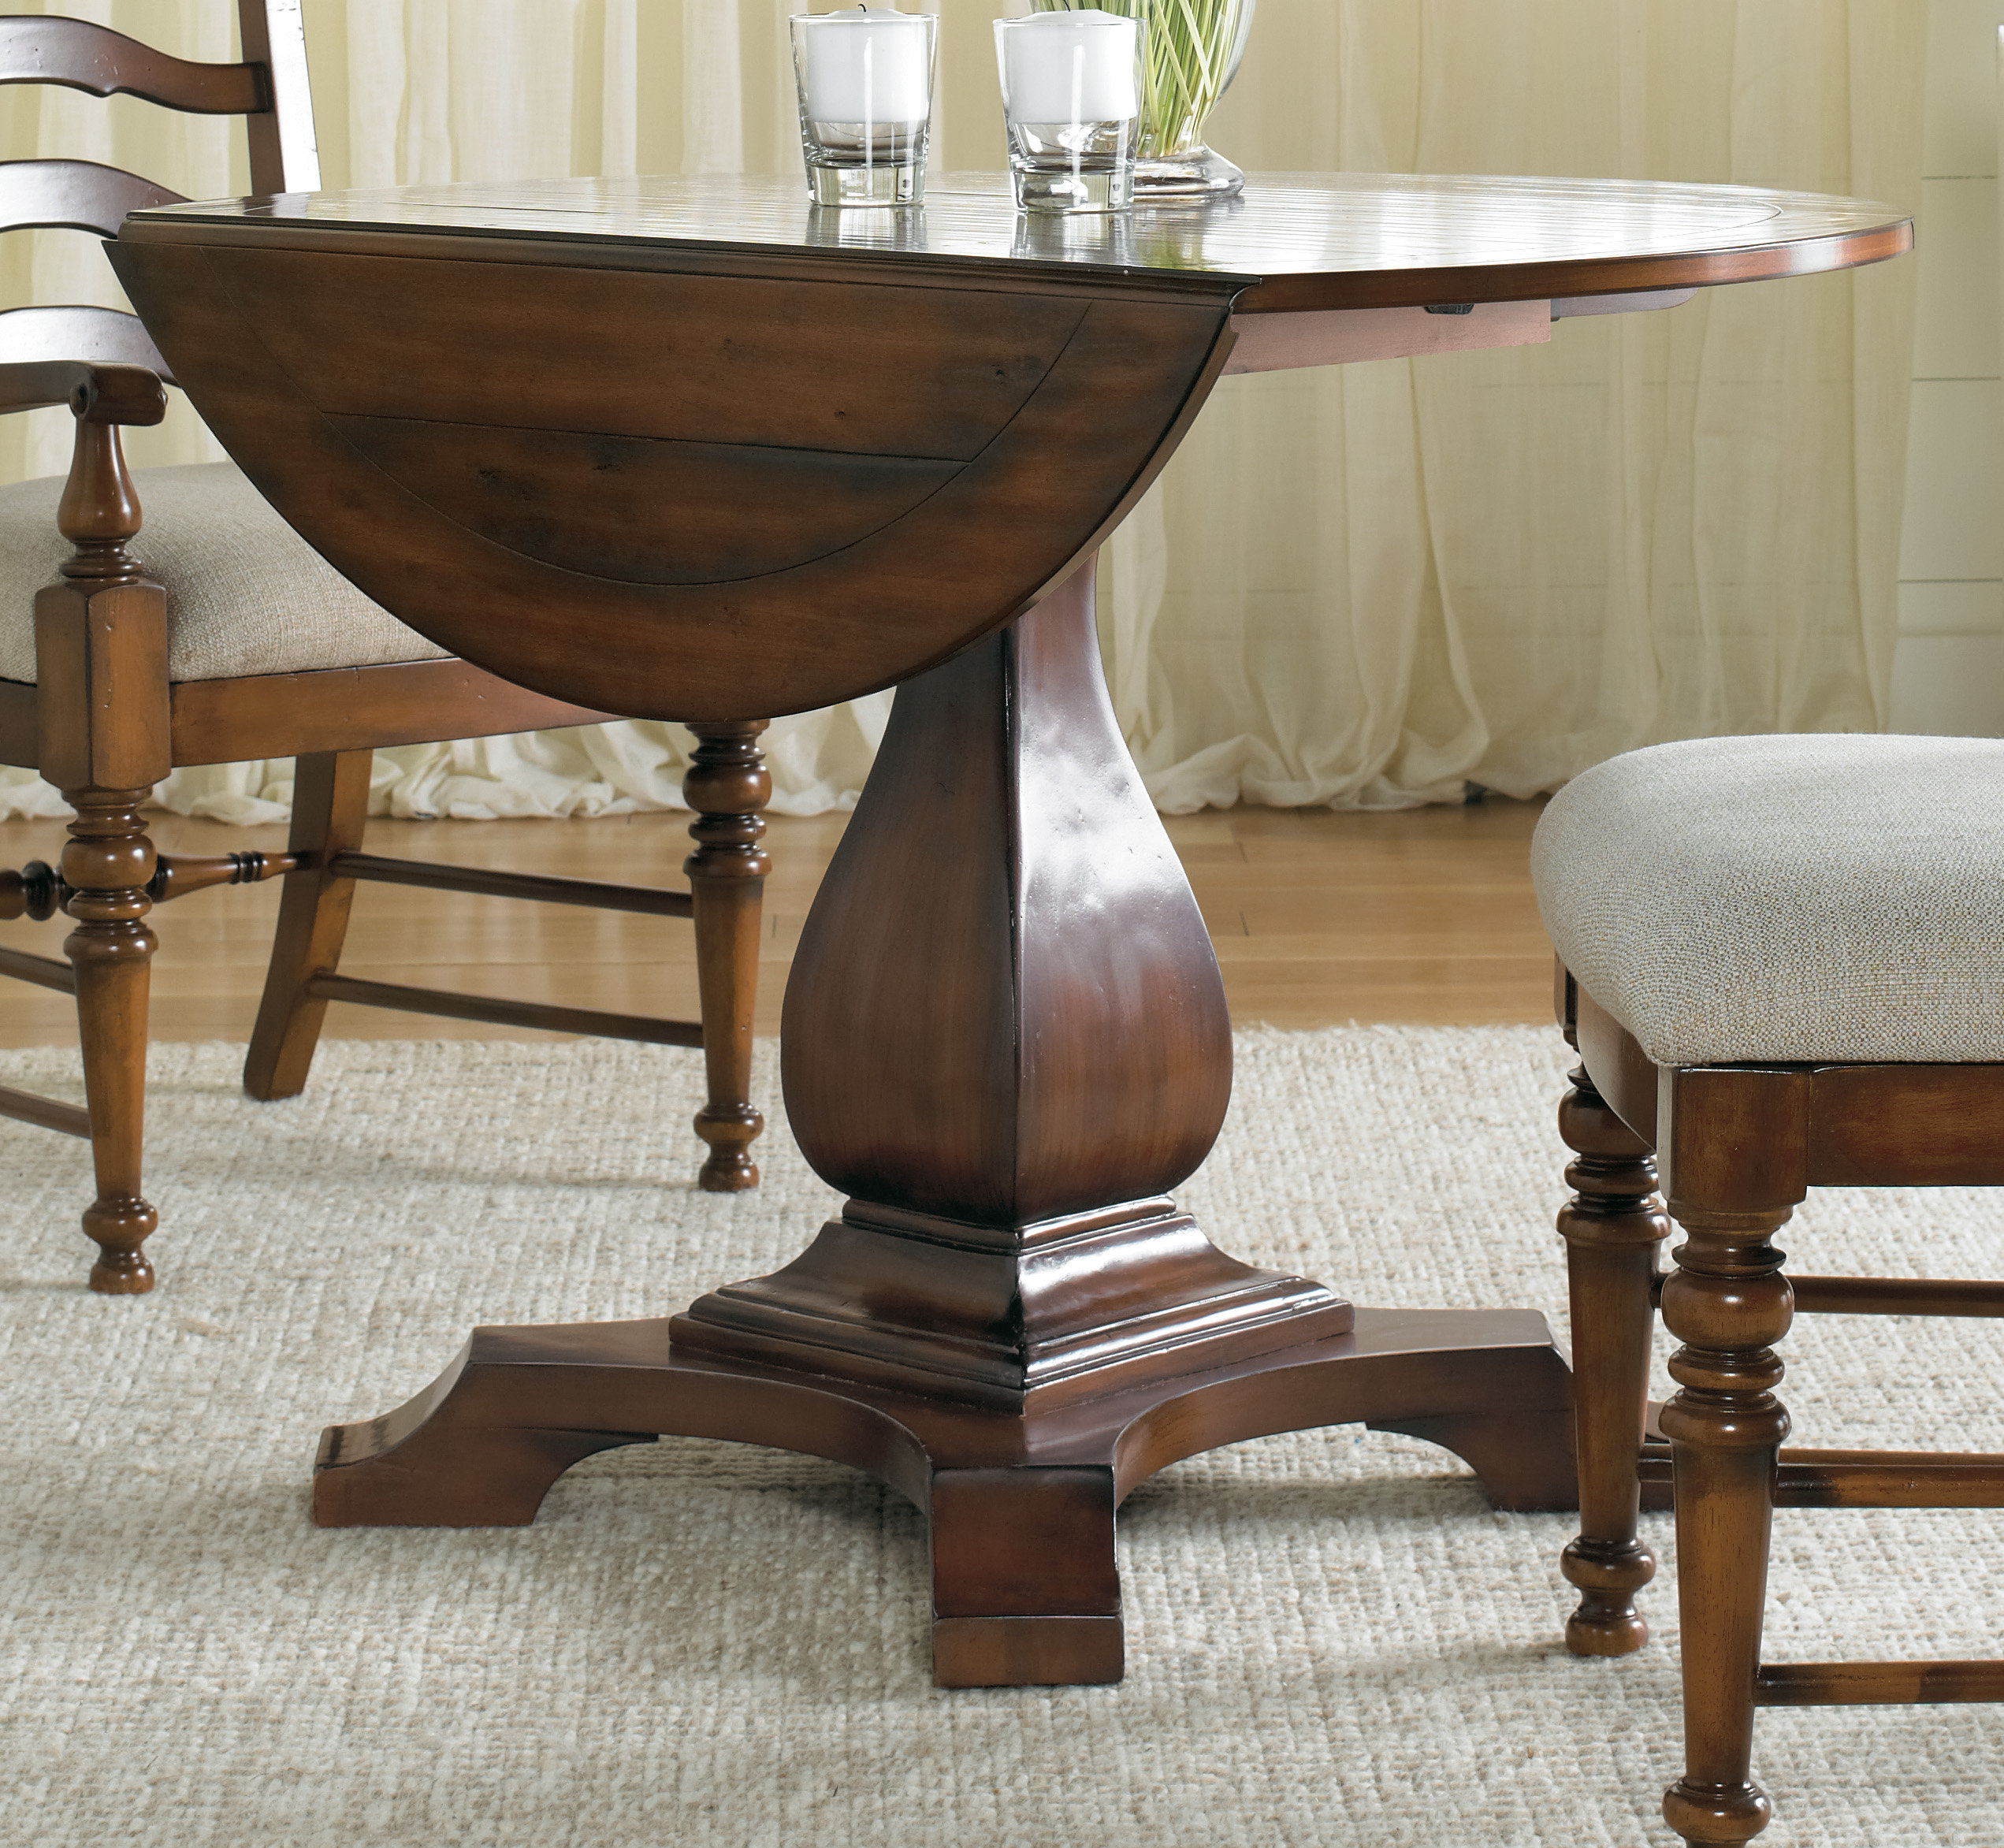 Hooker Furniture Waverly Place Drop Leaf Solid Wood Pedestal Dining Table Reviews Wayfair